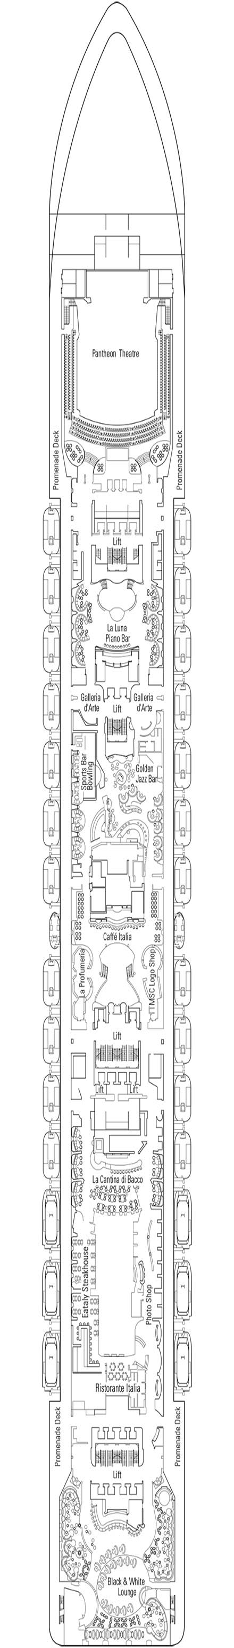 Msc Divina Apollo Deck Deck Plan